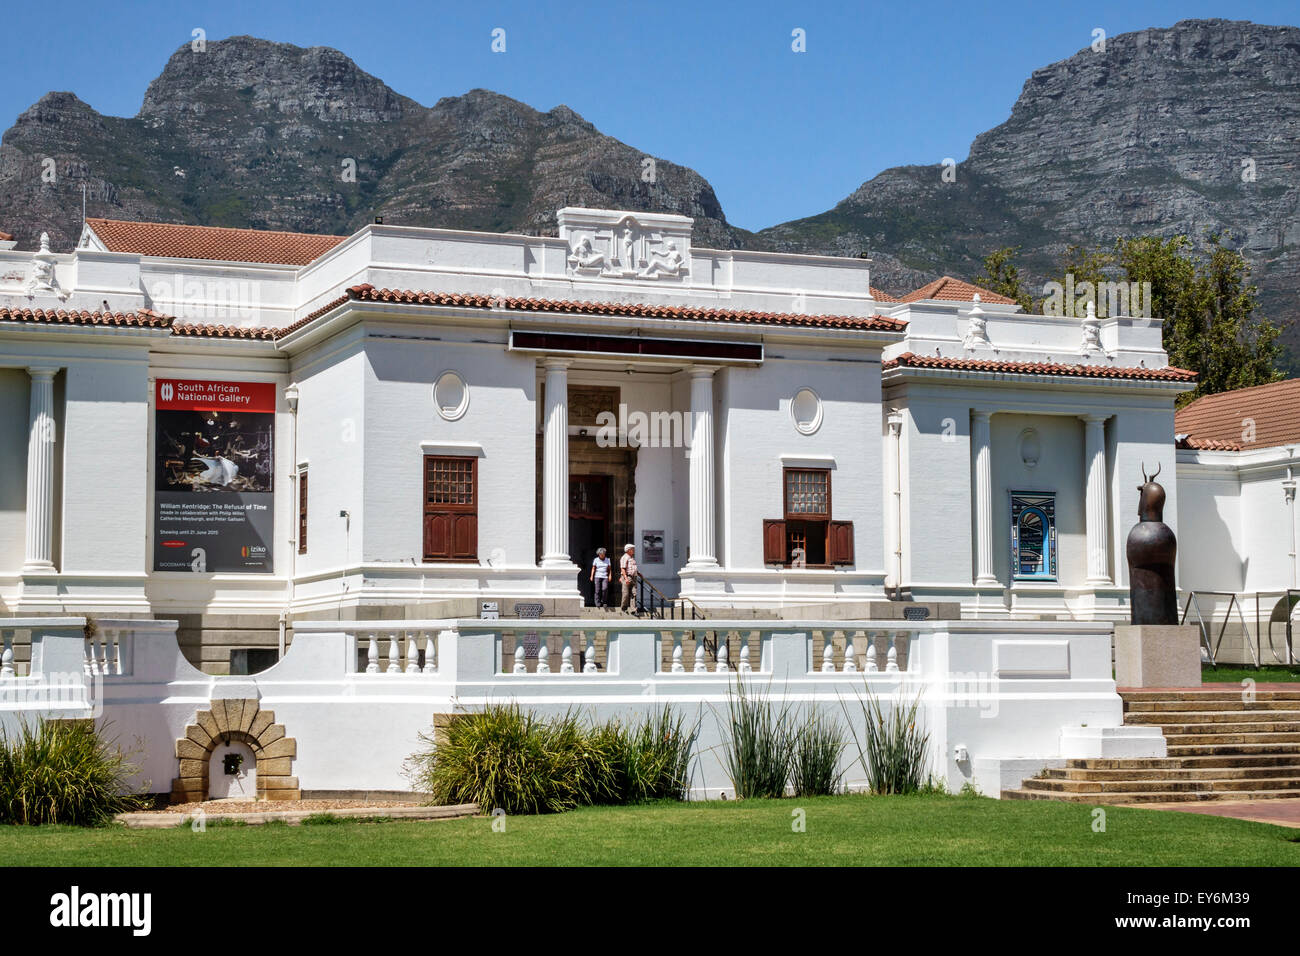 Cape Town South Africa,City Centre,center,Government Avenue,The Company's Garden,public park,Table Mountain National Park,National Gallery,SAfri150309 Stock Photo